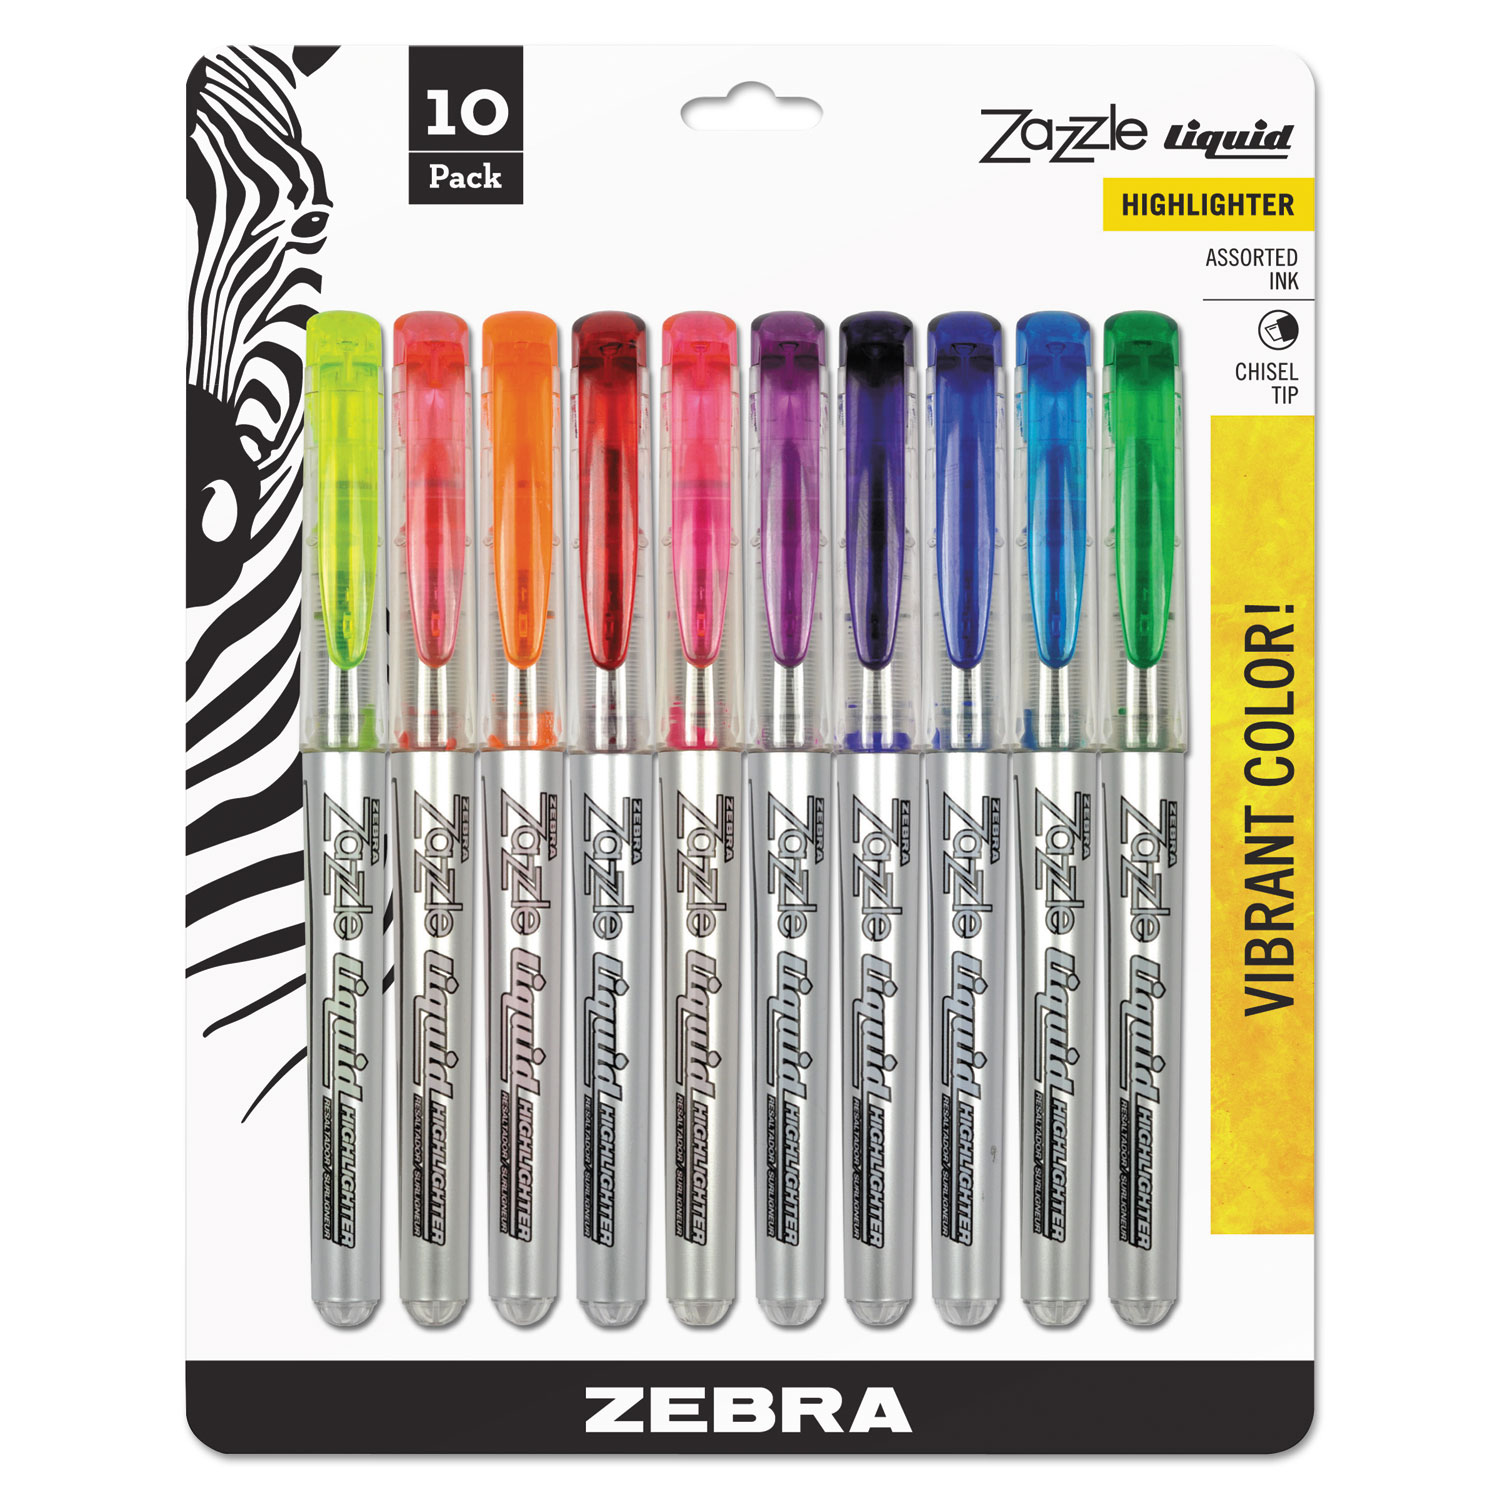  Zebra 71111 Zazzle Liquid Ink Highlighter, Chisel Tip, Assorted Colors, 10/Set (ZEB71111) 